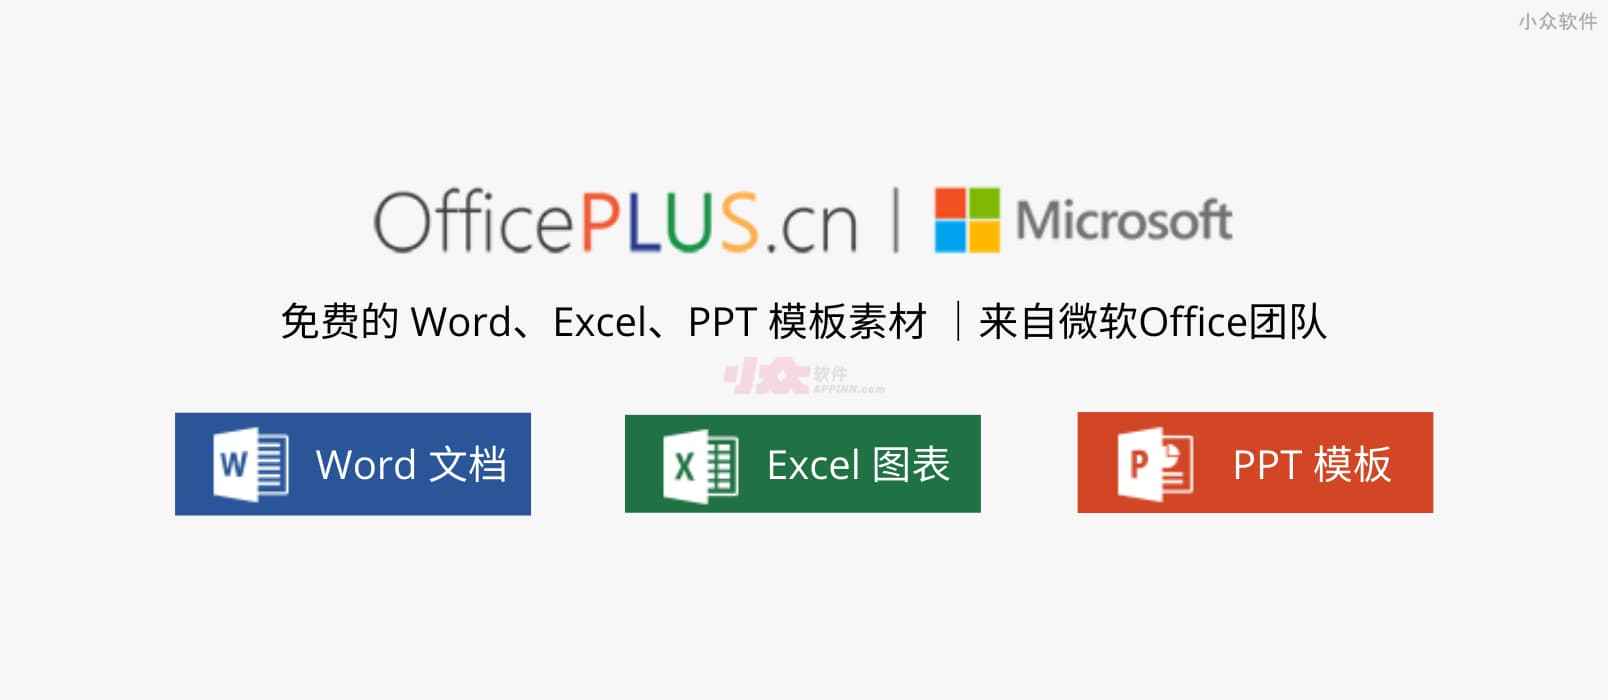 微软 Office Plus - 来自微软Office团队，免费的 Word、Excel、PPT 模板素材，及 PPT 插件，